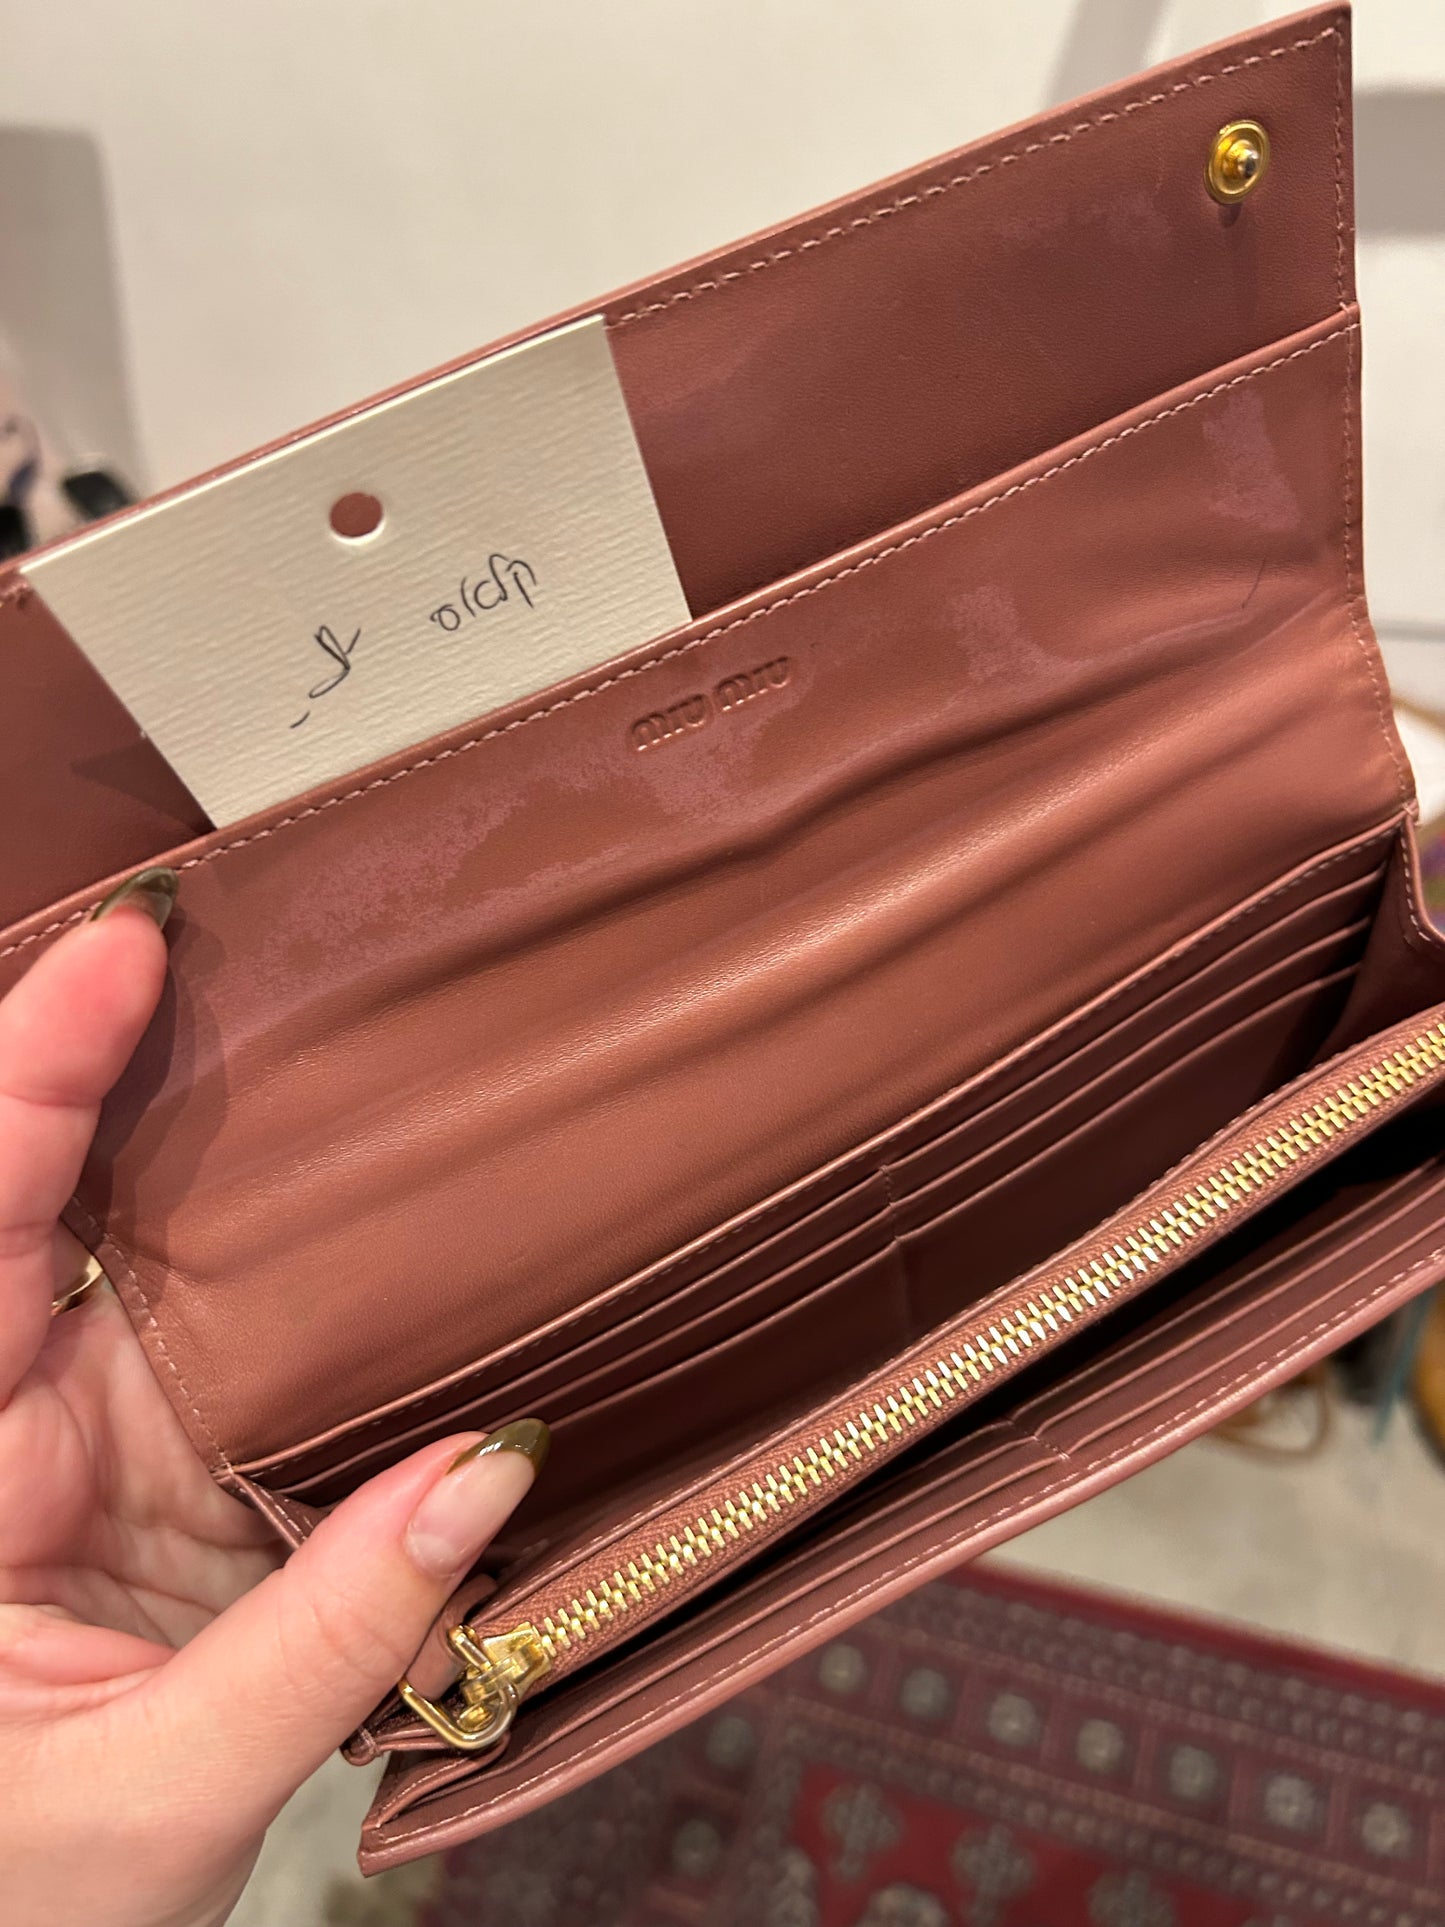 MIU MIU wallet leather salmon pink